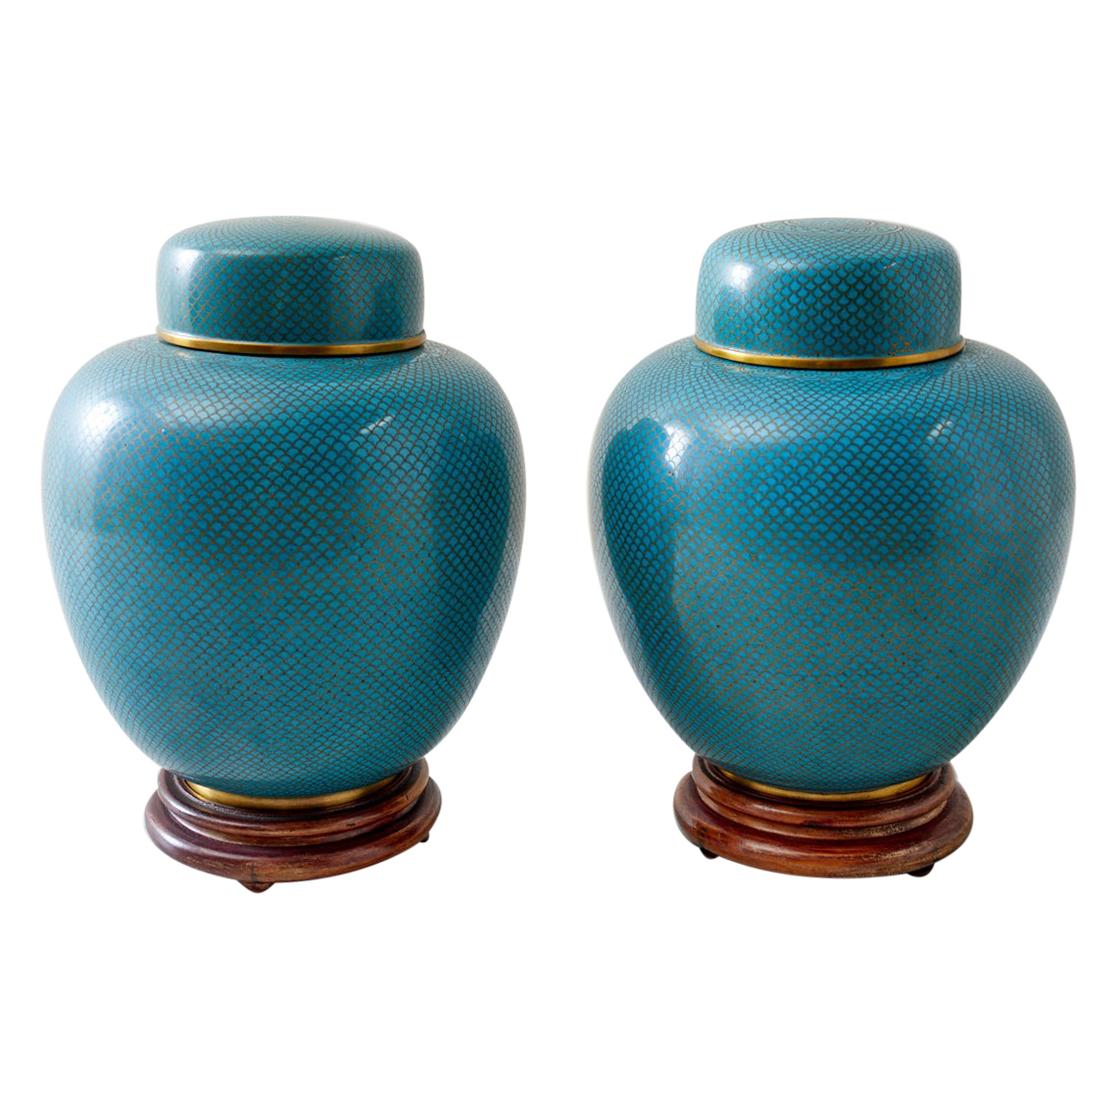 Pair of Chinese Cloisonné Enamel Lidded Jars